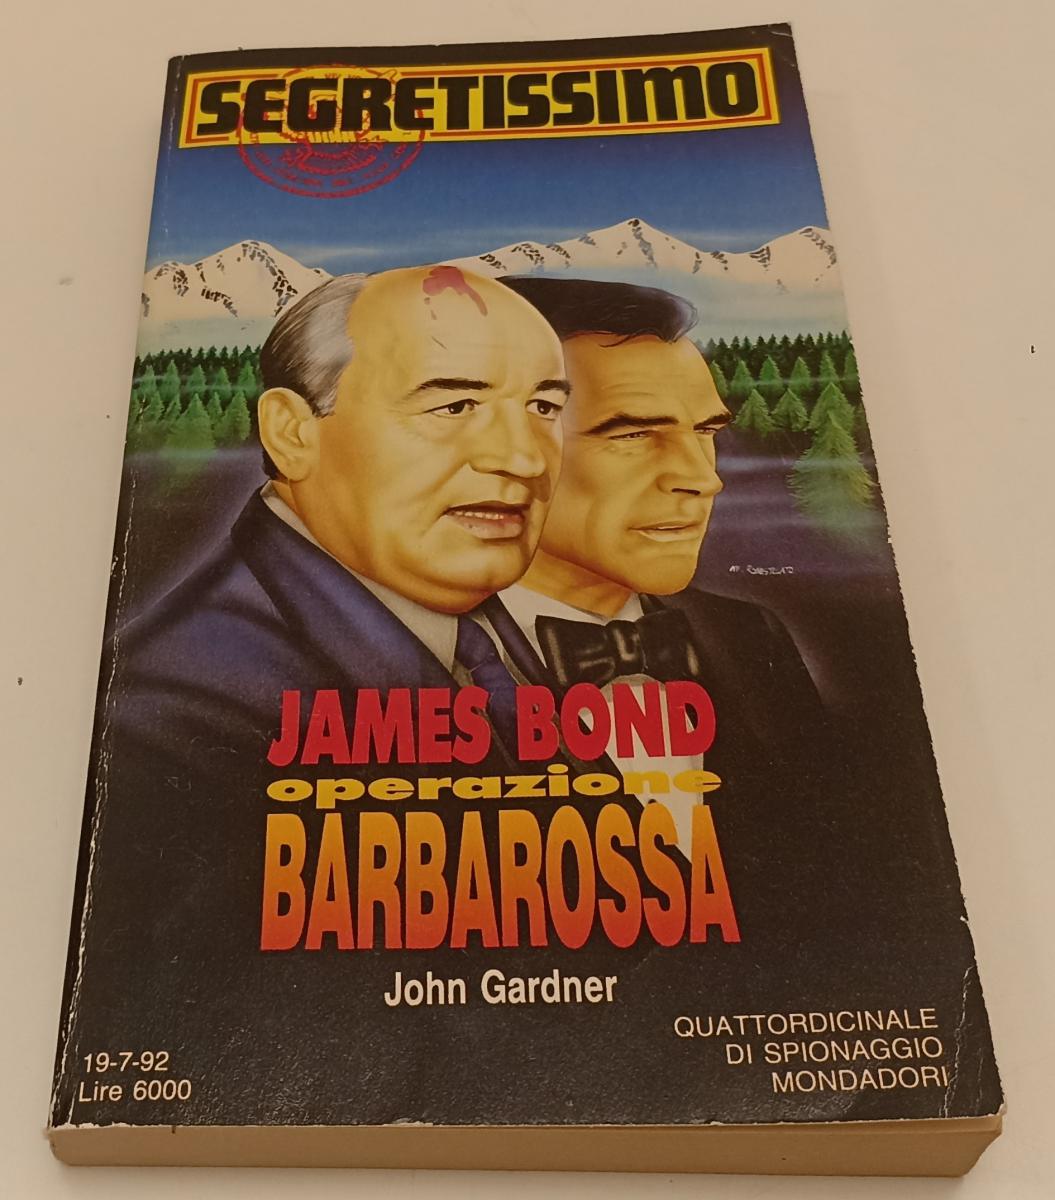 LG- JAMES BOND OPERAZIONE BARBAROSSA- JOHN GARDNER- SEGRETISSIMO- 1992- B-XFS179